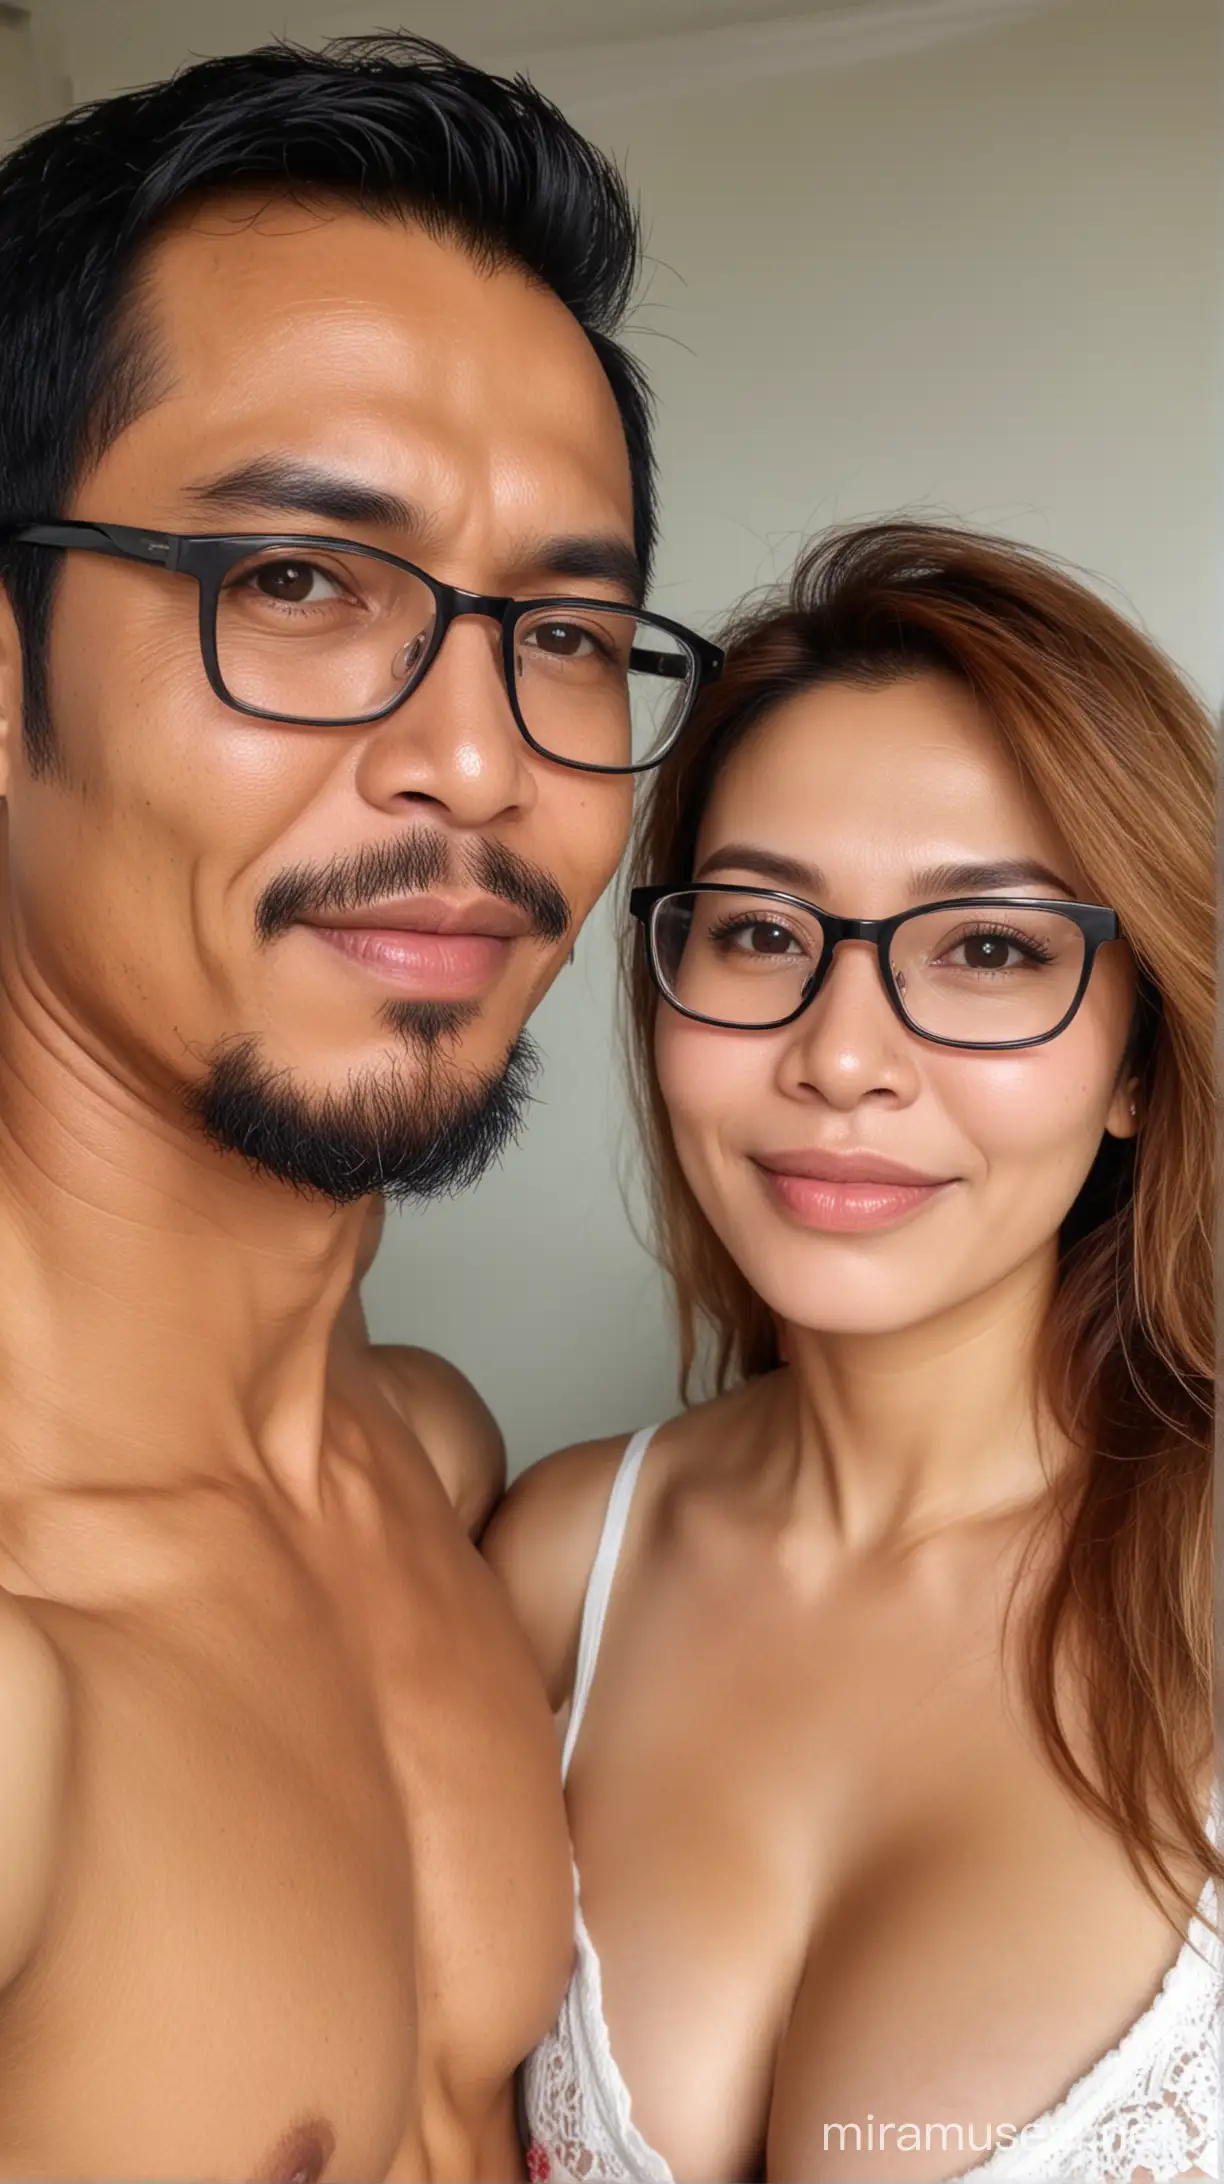 Indonesian handsome guy 46 years old, glasses, light beard, hug her cute wife, super big breast, good anatomy, perfect body.
